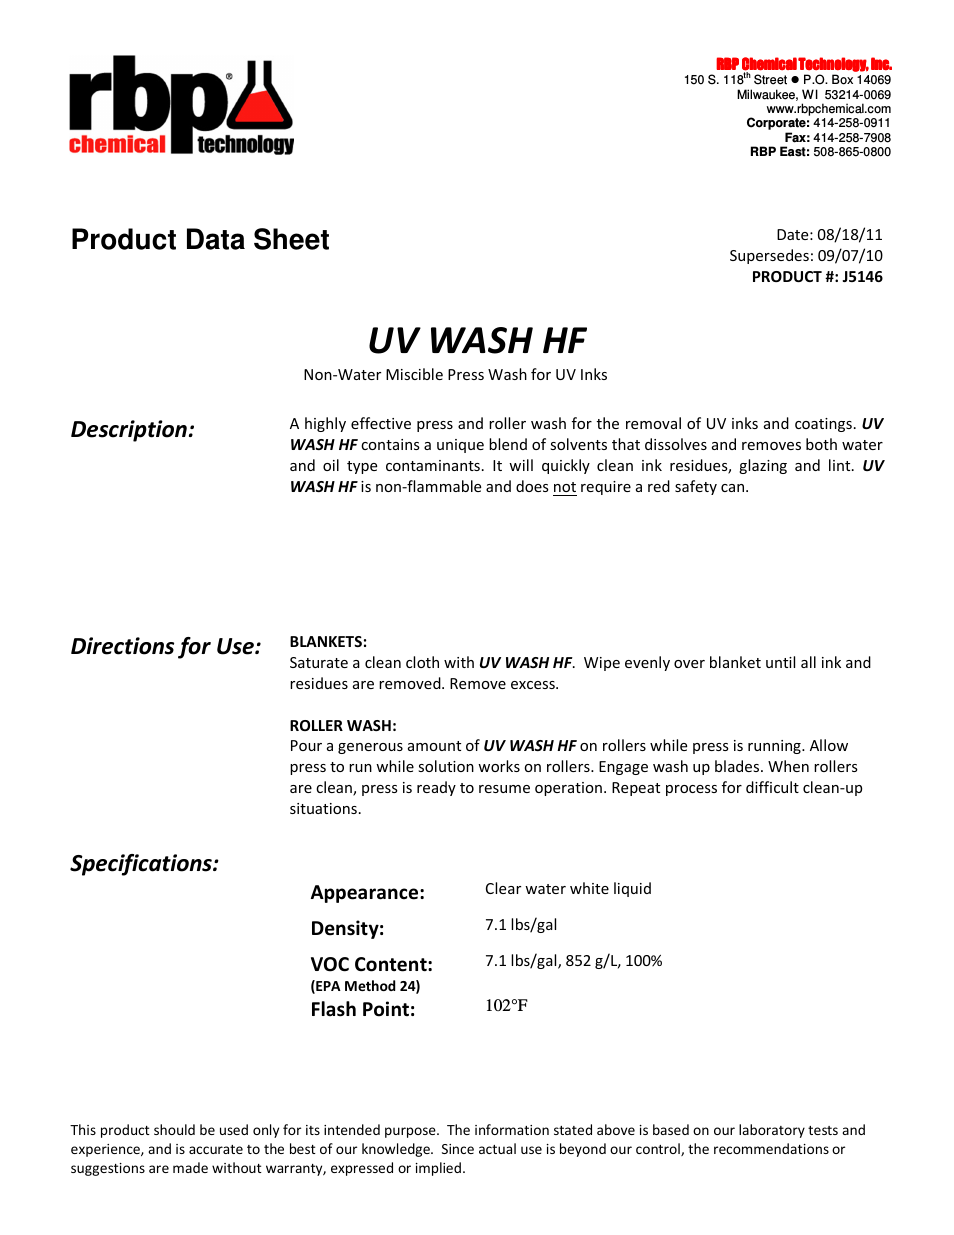 J5146 UV WASH HF